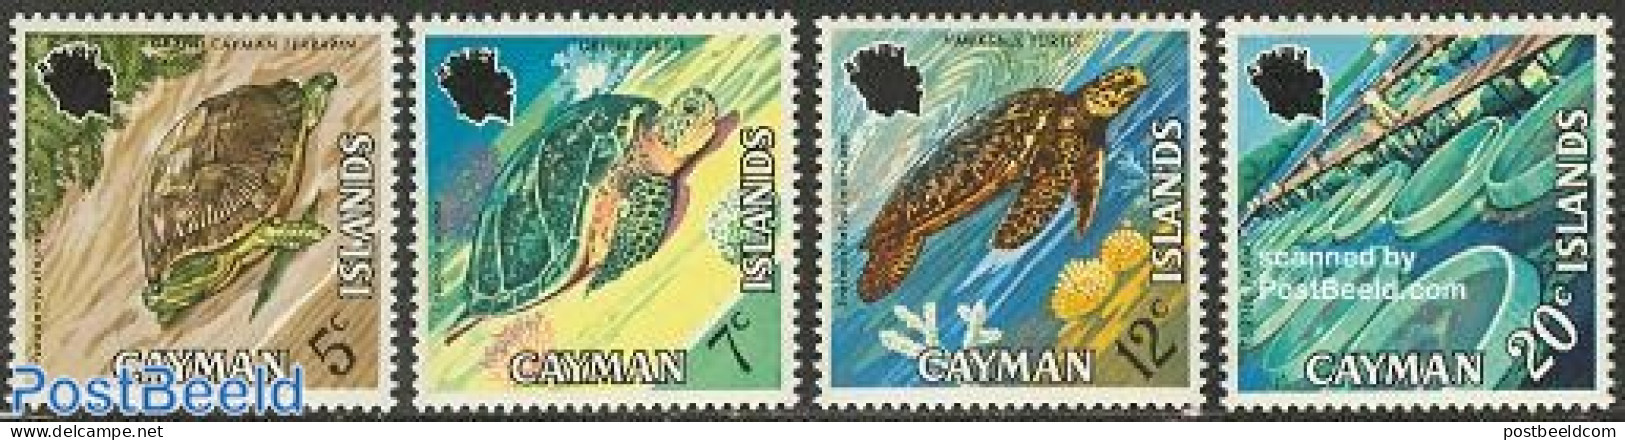 Cayman Islands 1971 Water Turtles 4v, Mint NH, Nature - Reptiles - Turtles - Kaimaninseln